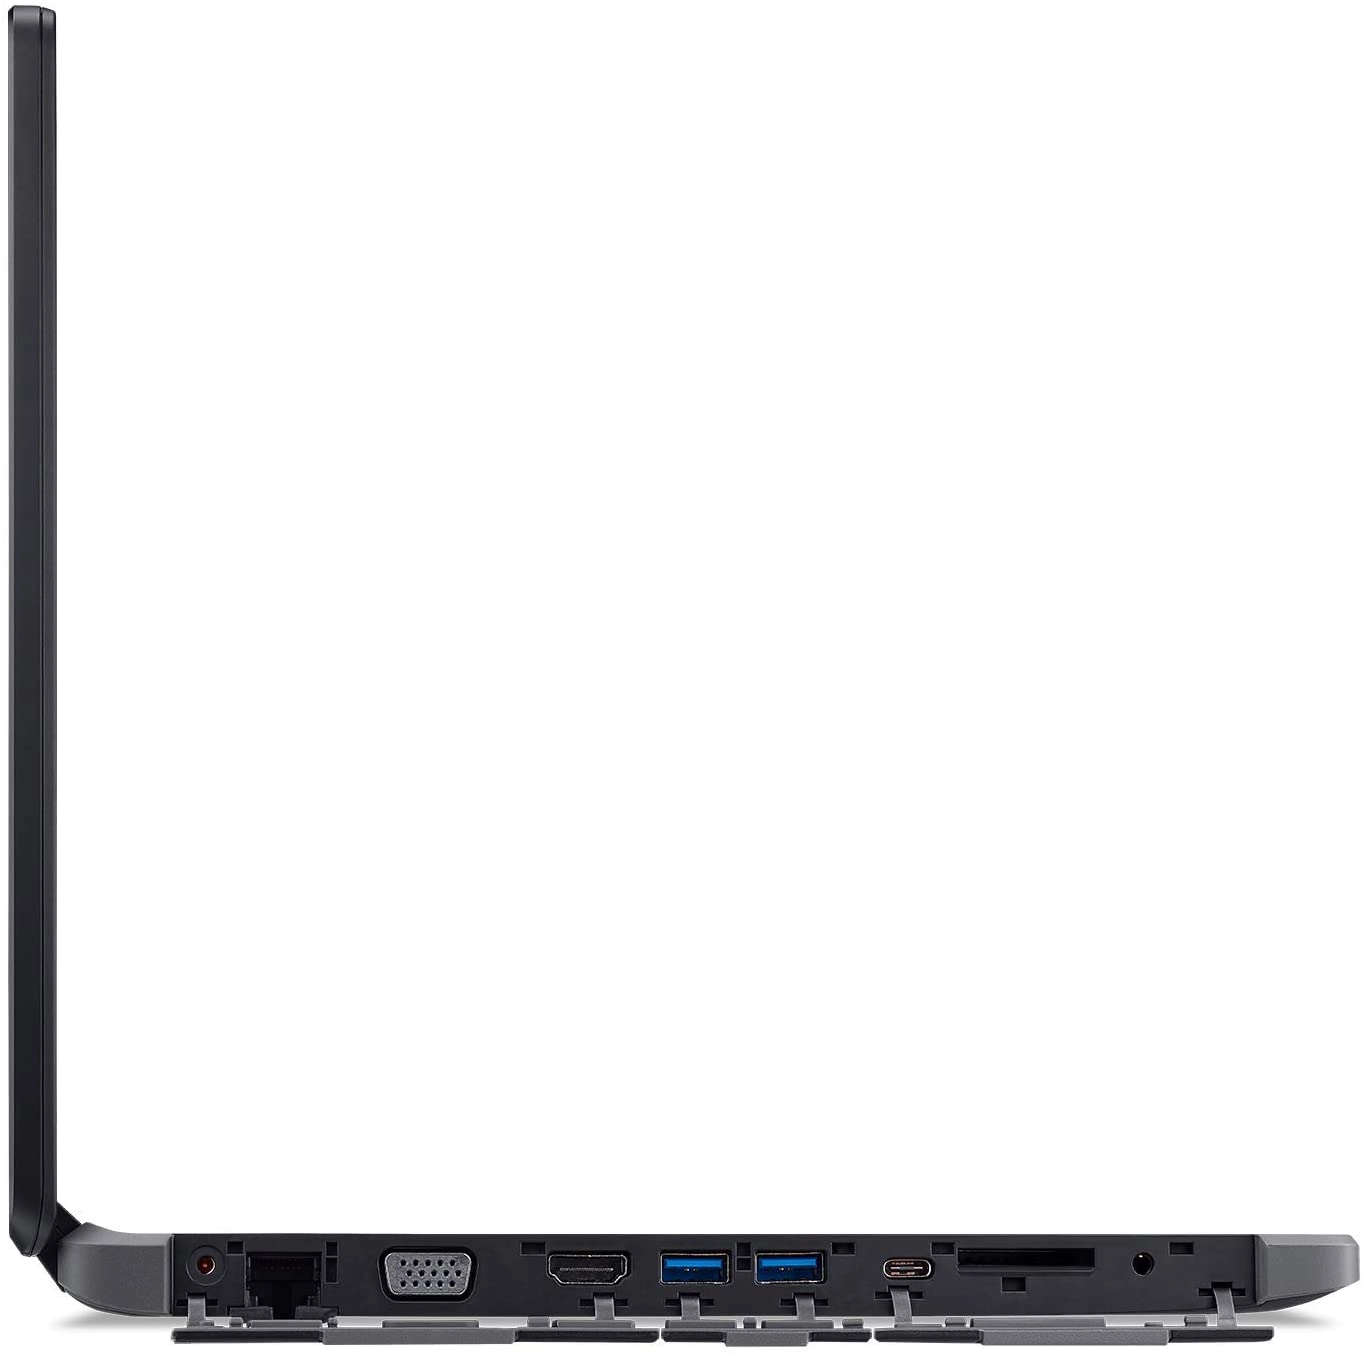 Acer EN314-51W-53RR laptop image